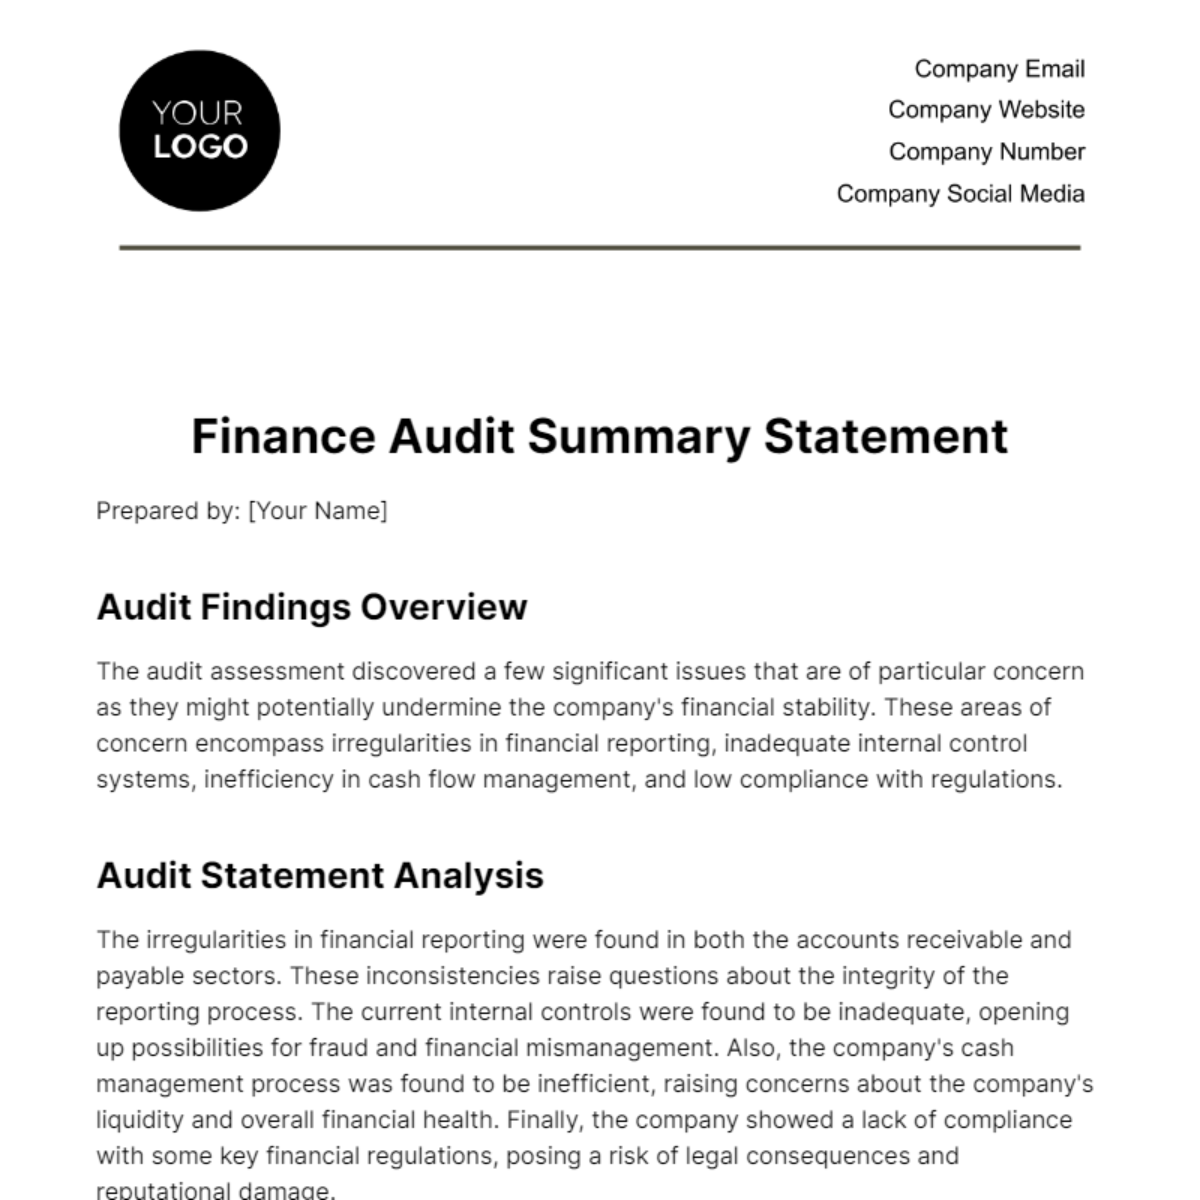 Finance Audit Summary Statement Template